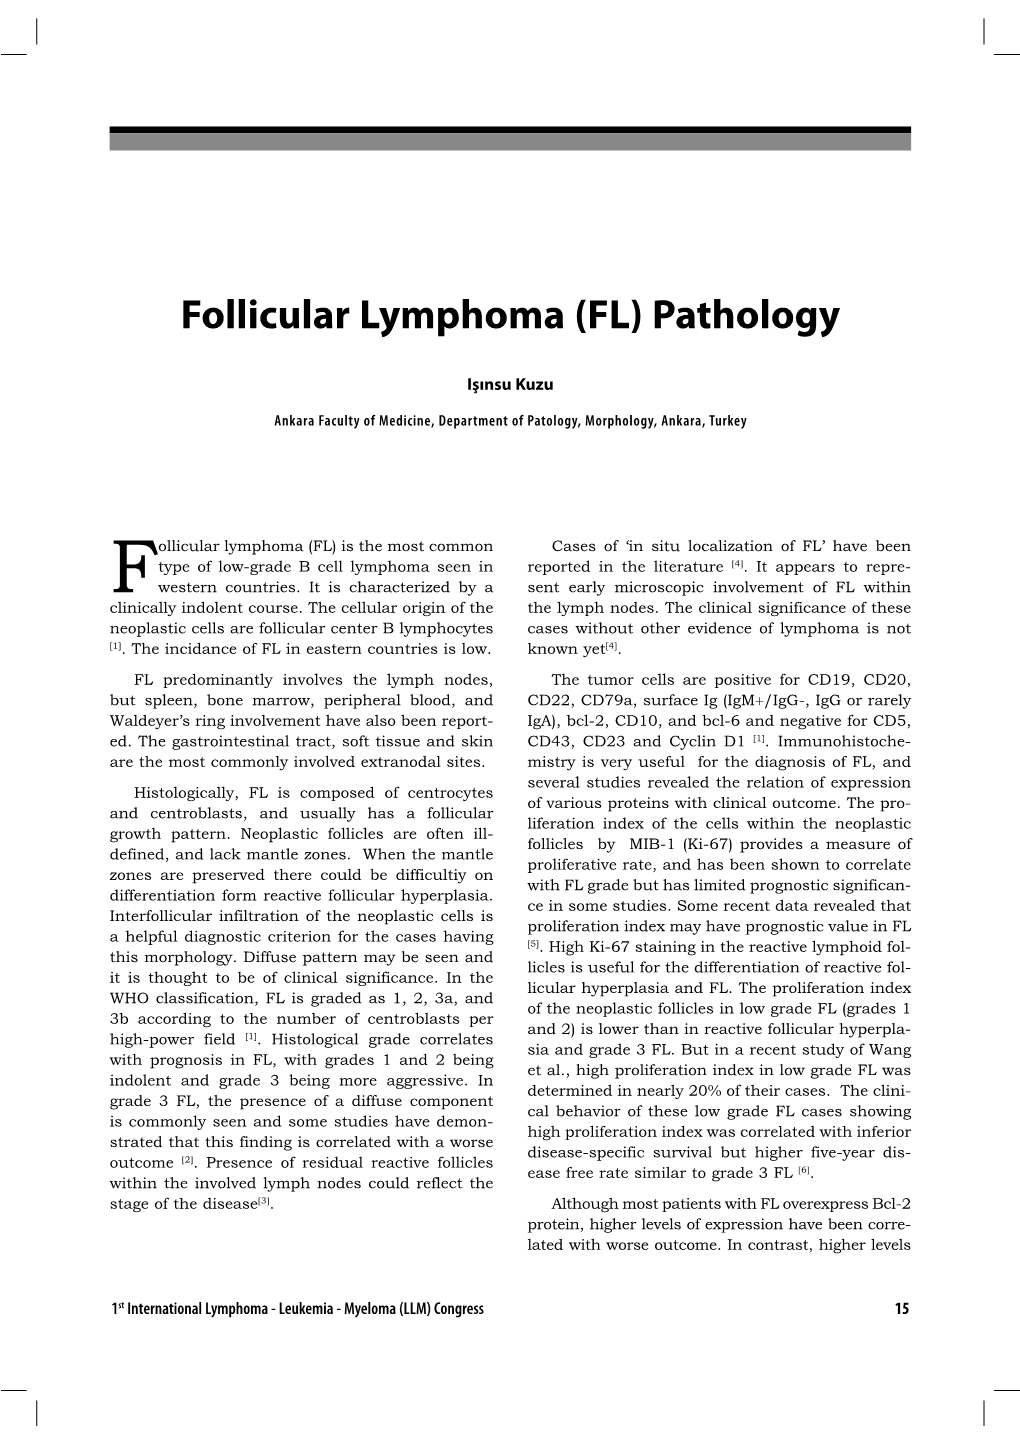 Follicular Lymphoma (FL) Pathology